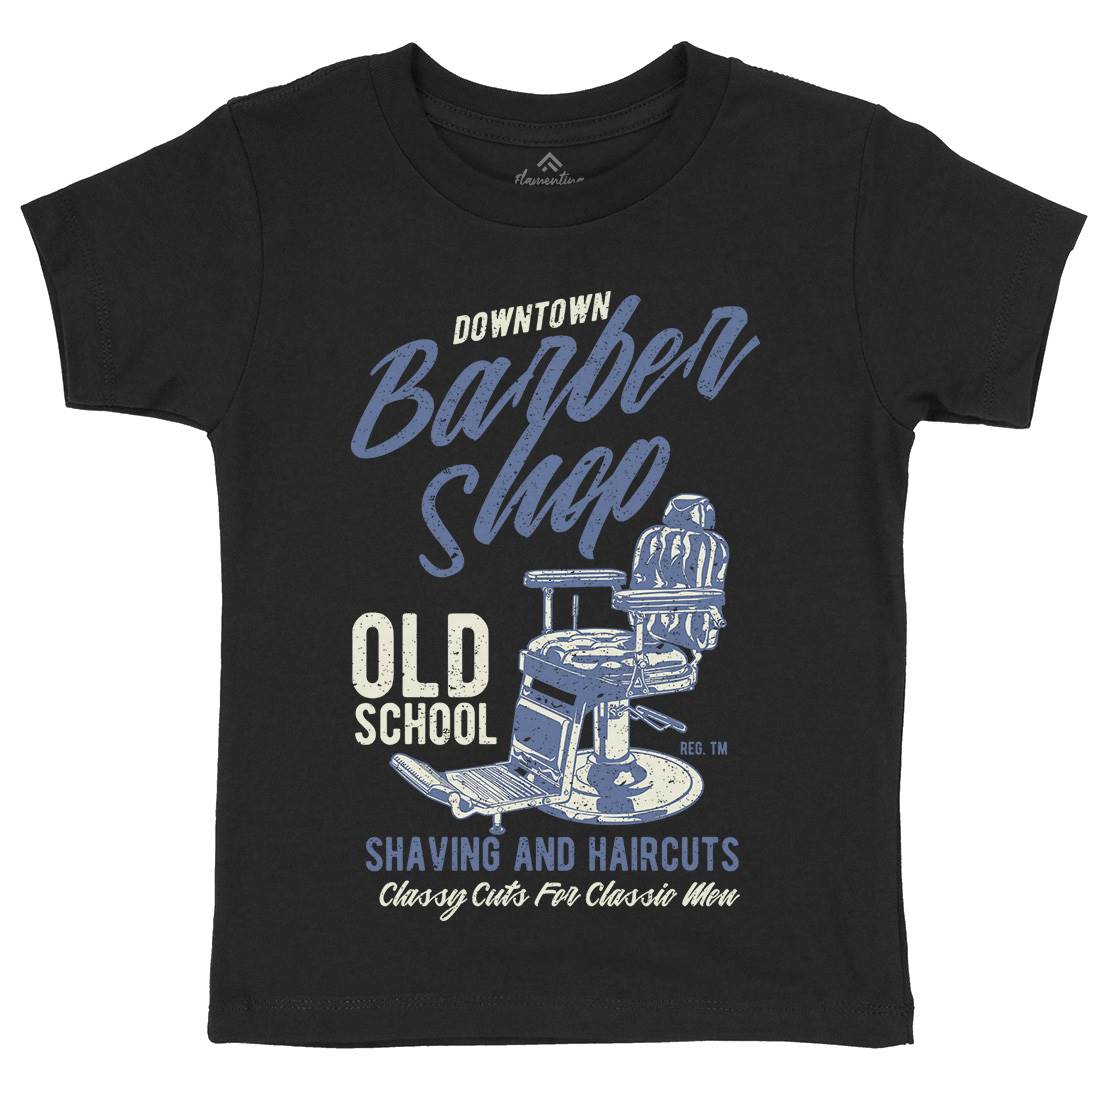 Downtown Barbershop Kids Organic Crew Neck T-Shirt Barber A646